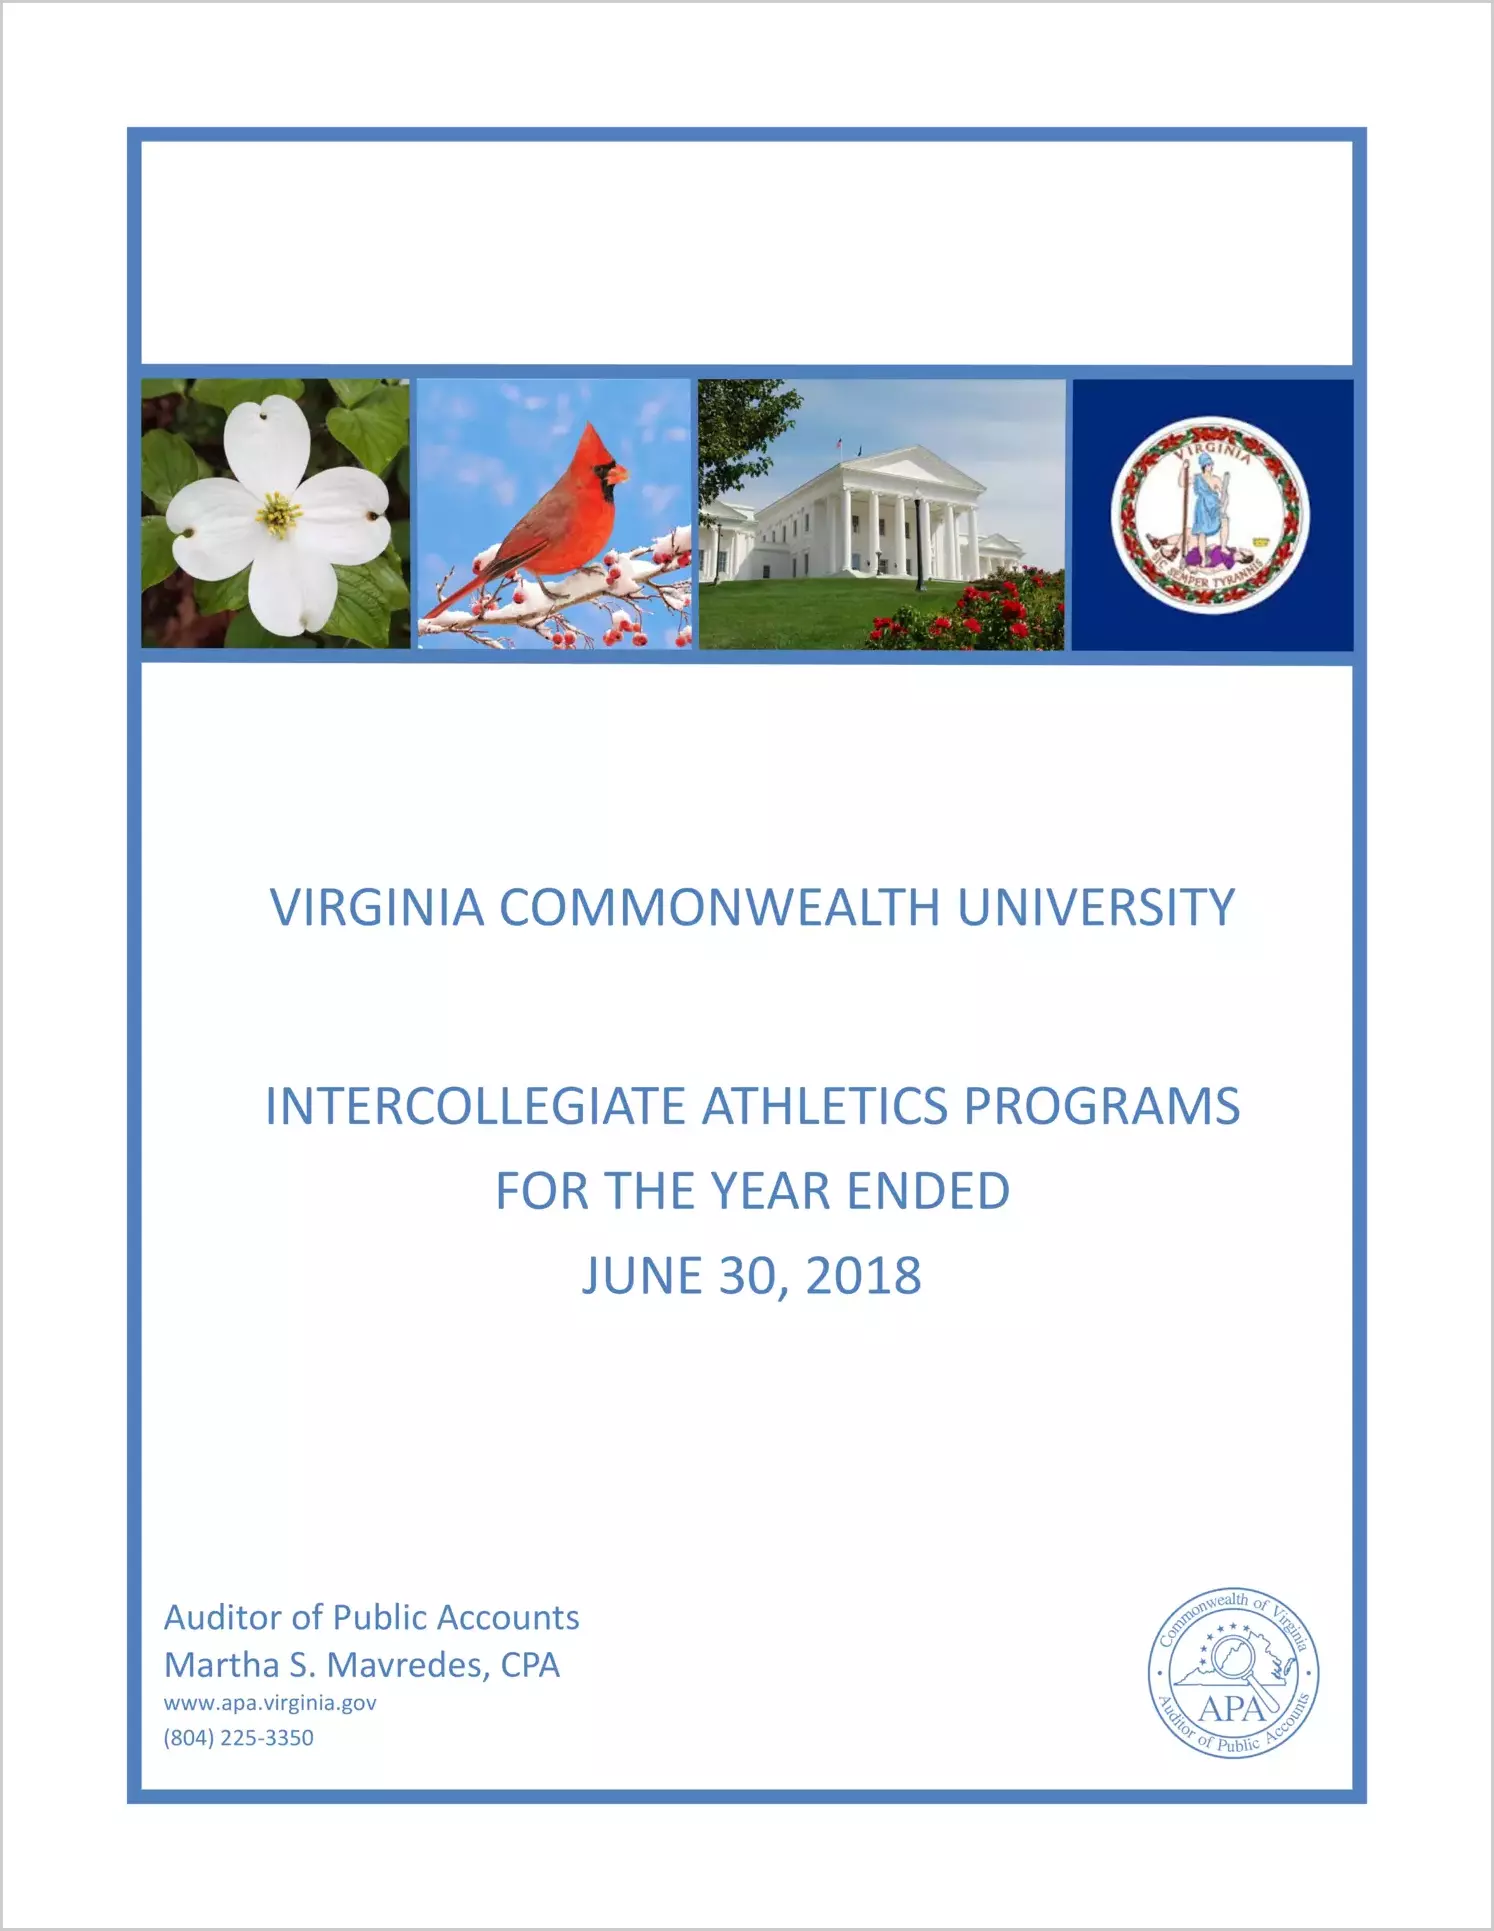 Virginia Commonwealth University Intercollegiate Athletics Programs for the year ended June 30, 2018